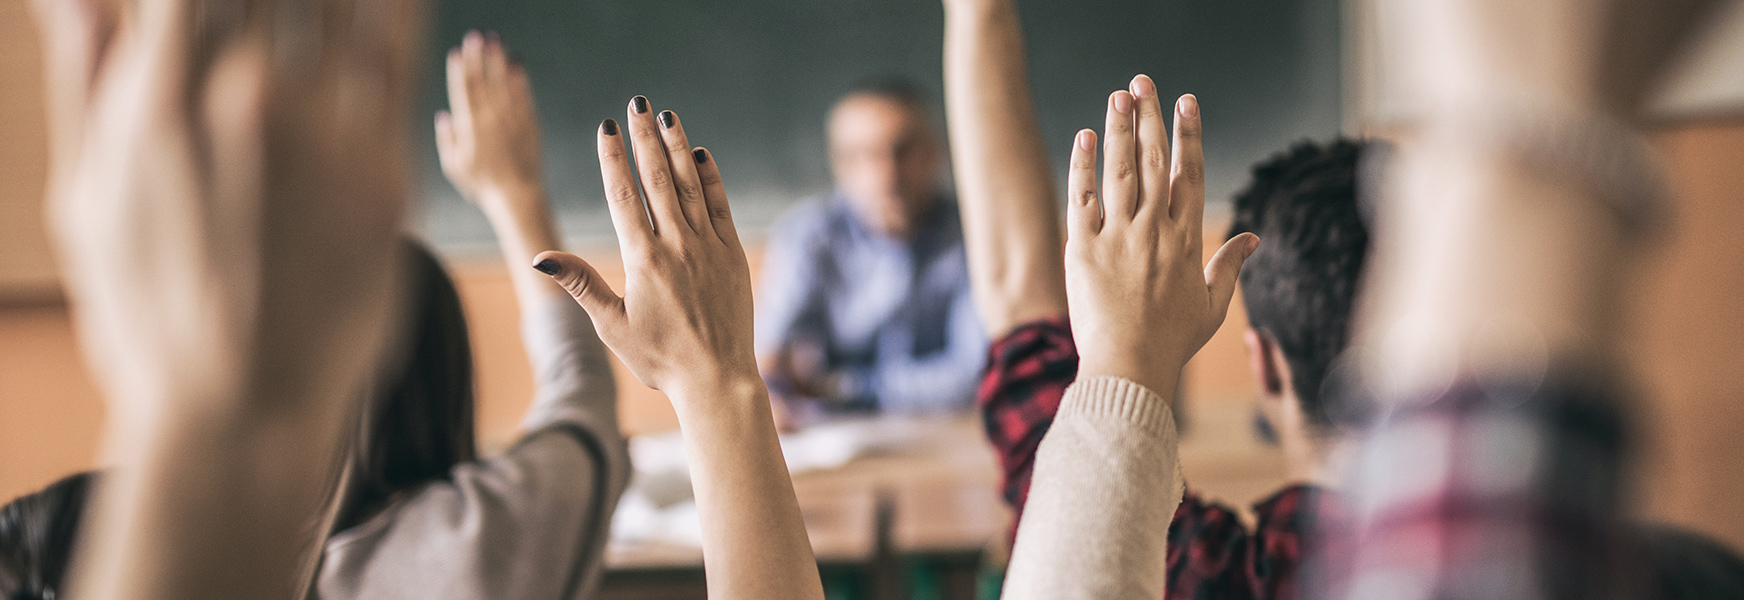 Kids in classroom raising hand